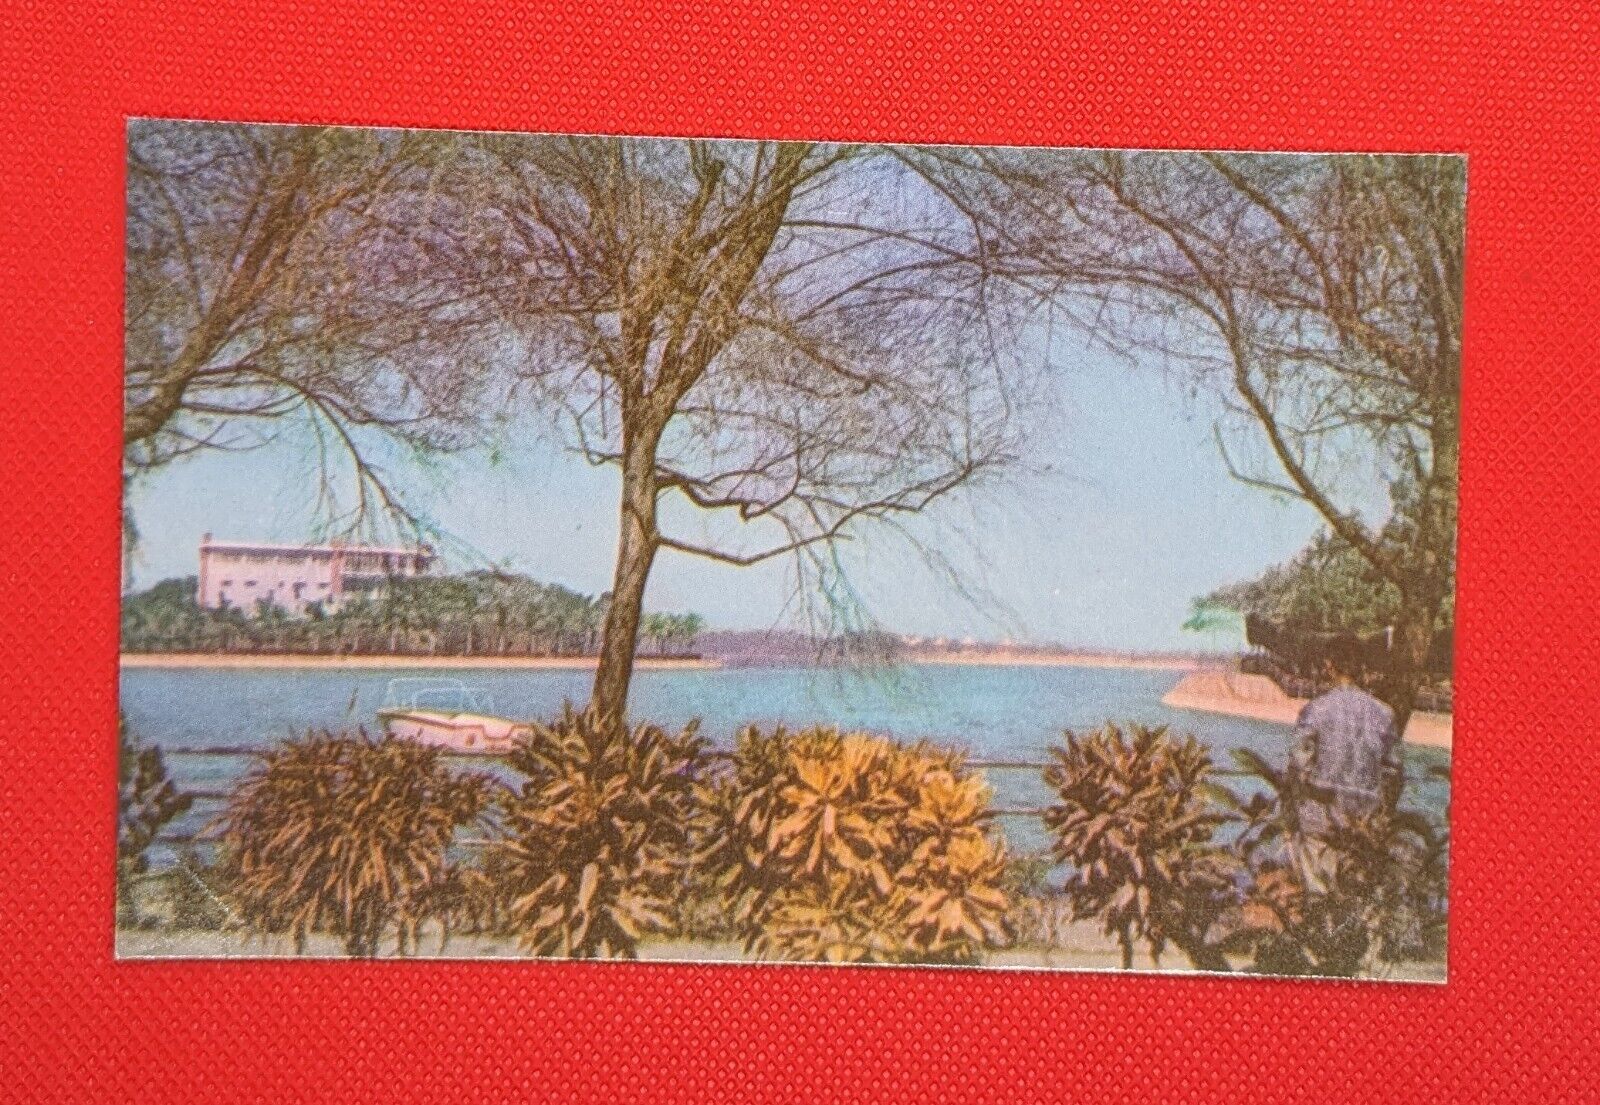 Vintage Lake Ta Pei China Scenic View Postcard